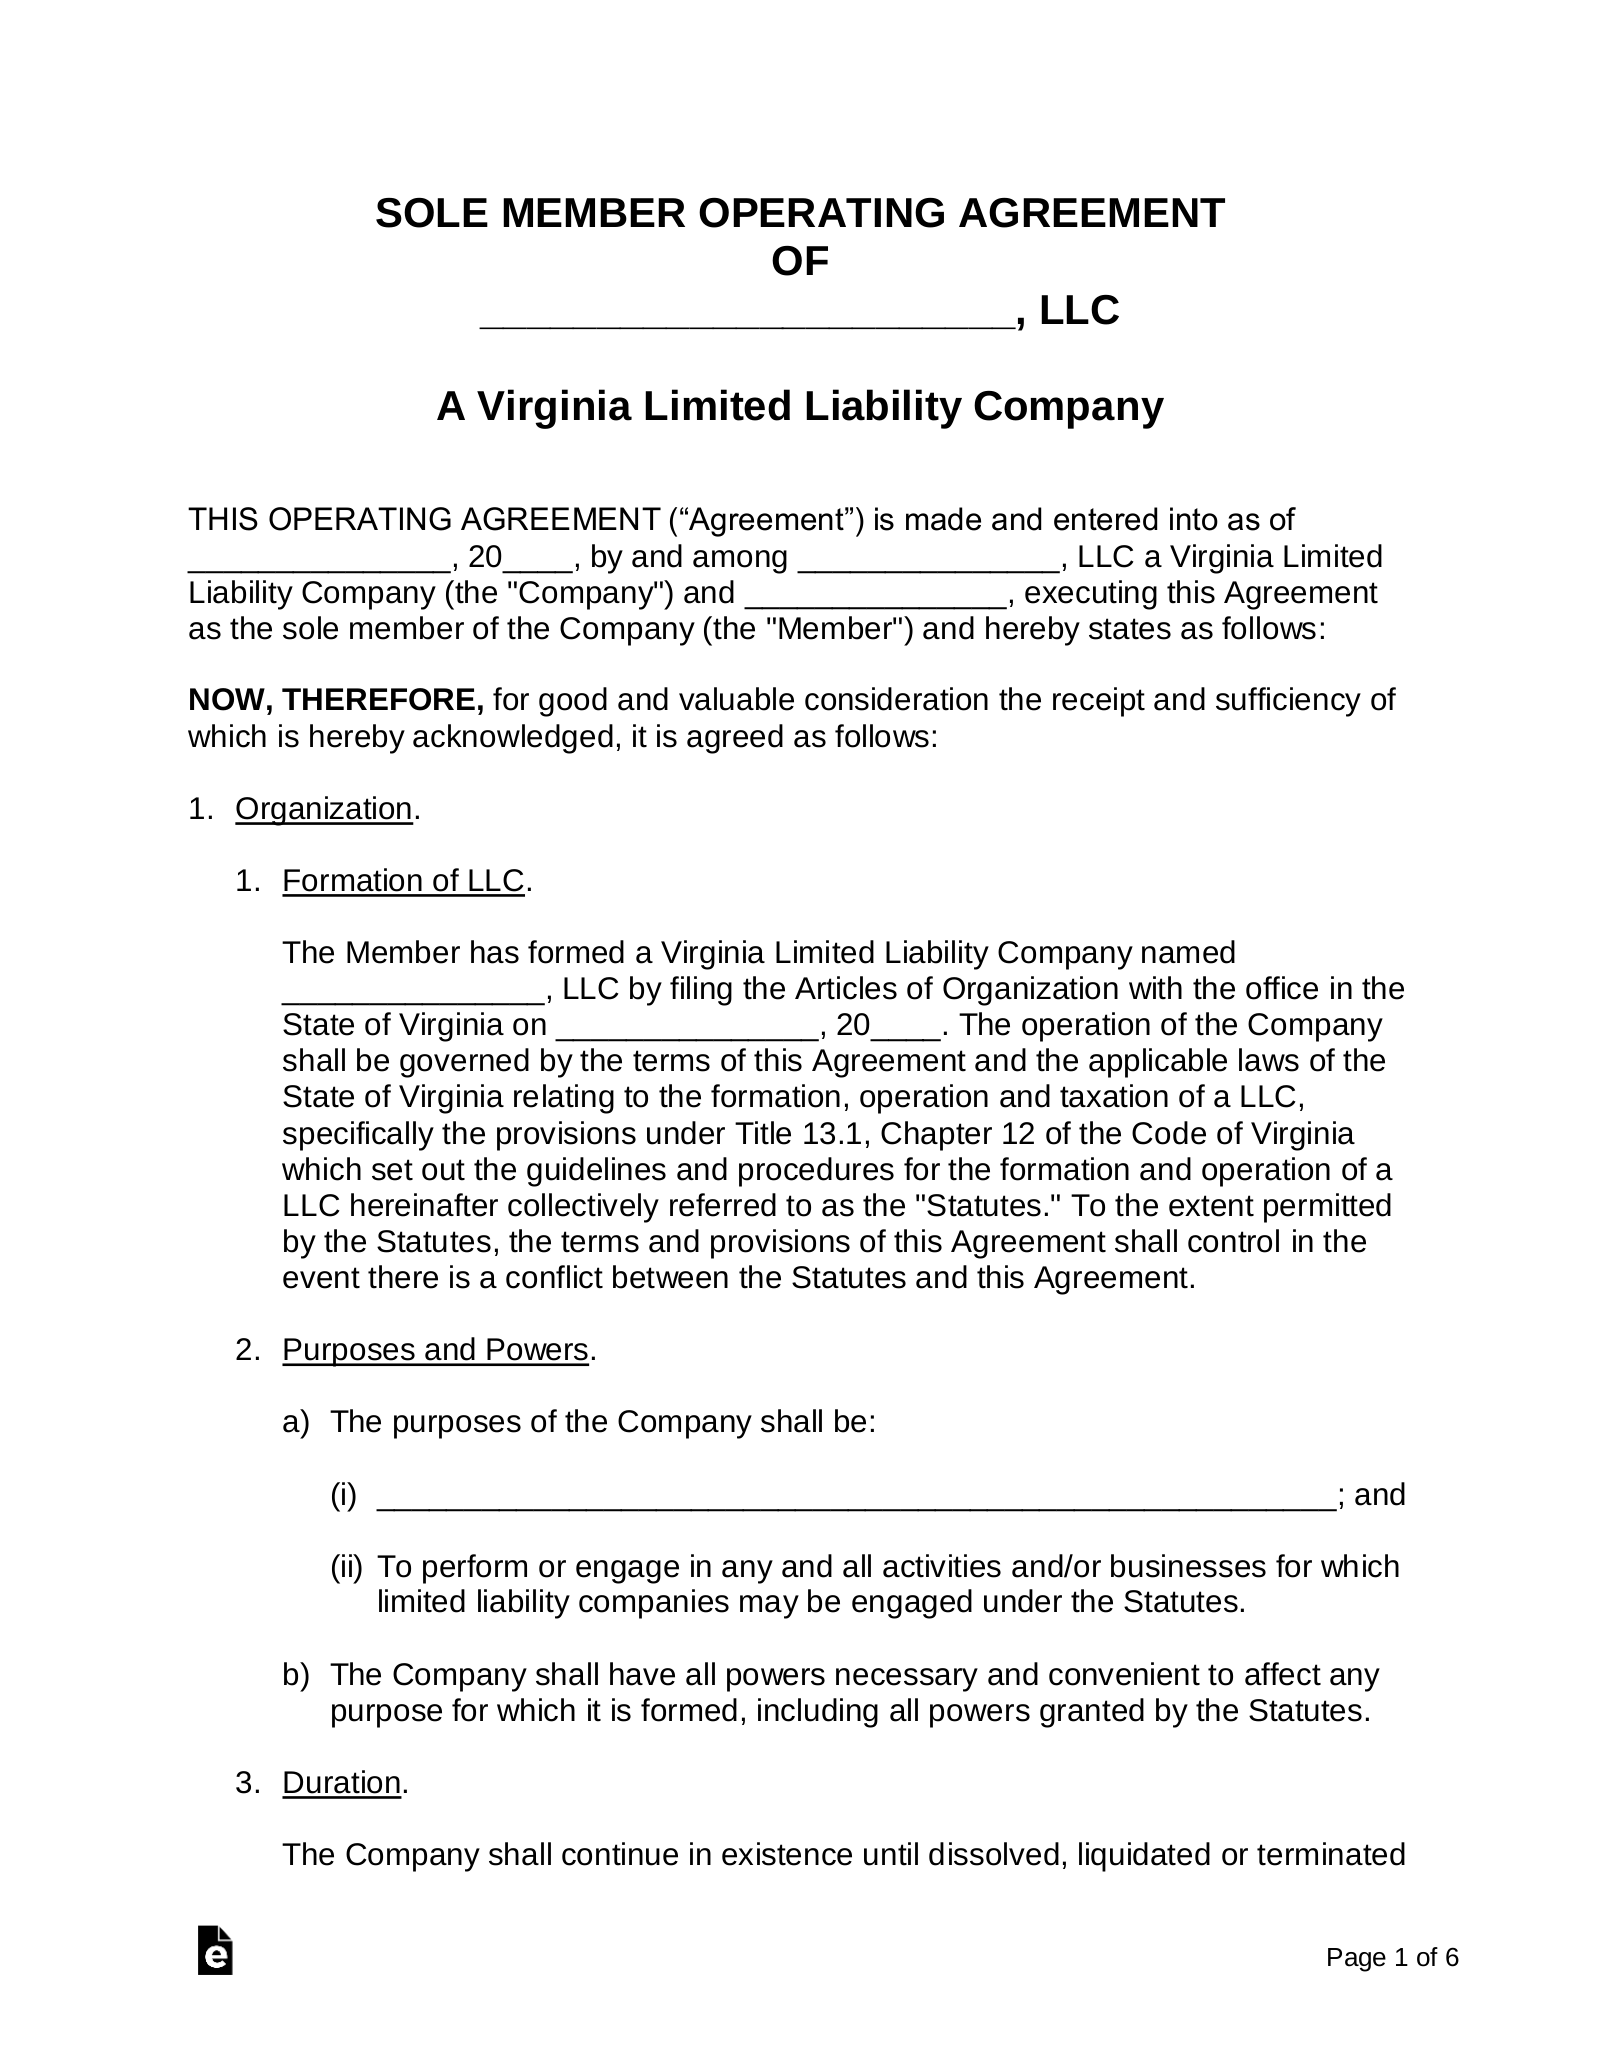 Virginia Single Member LLC Operating Agreement Form